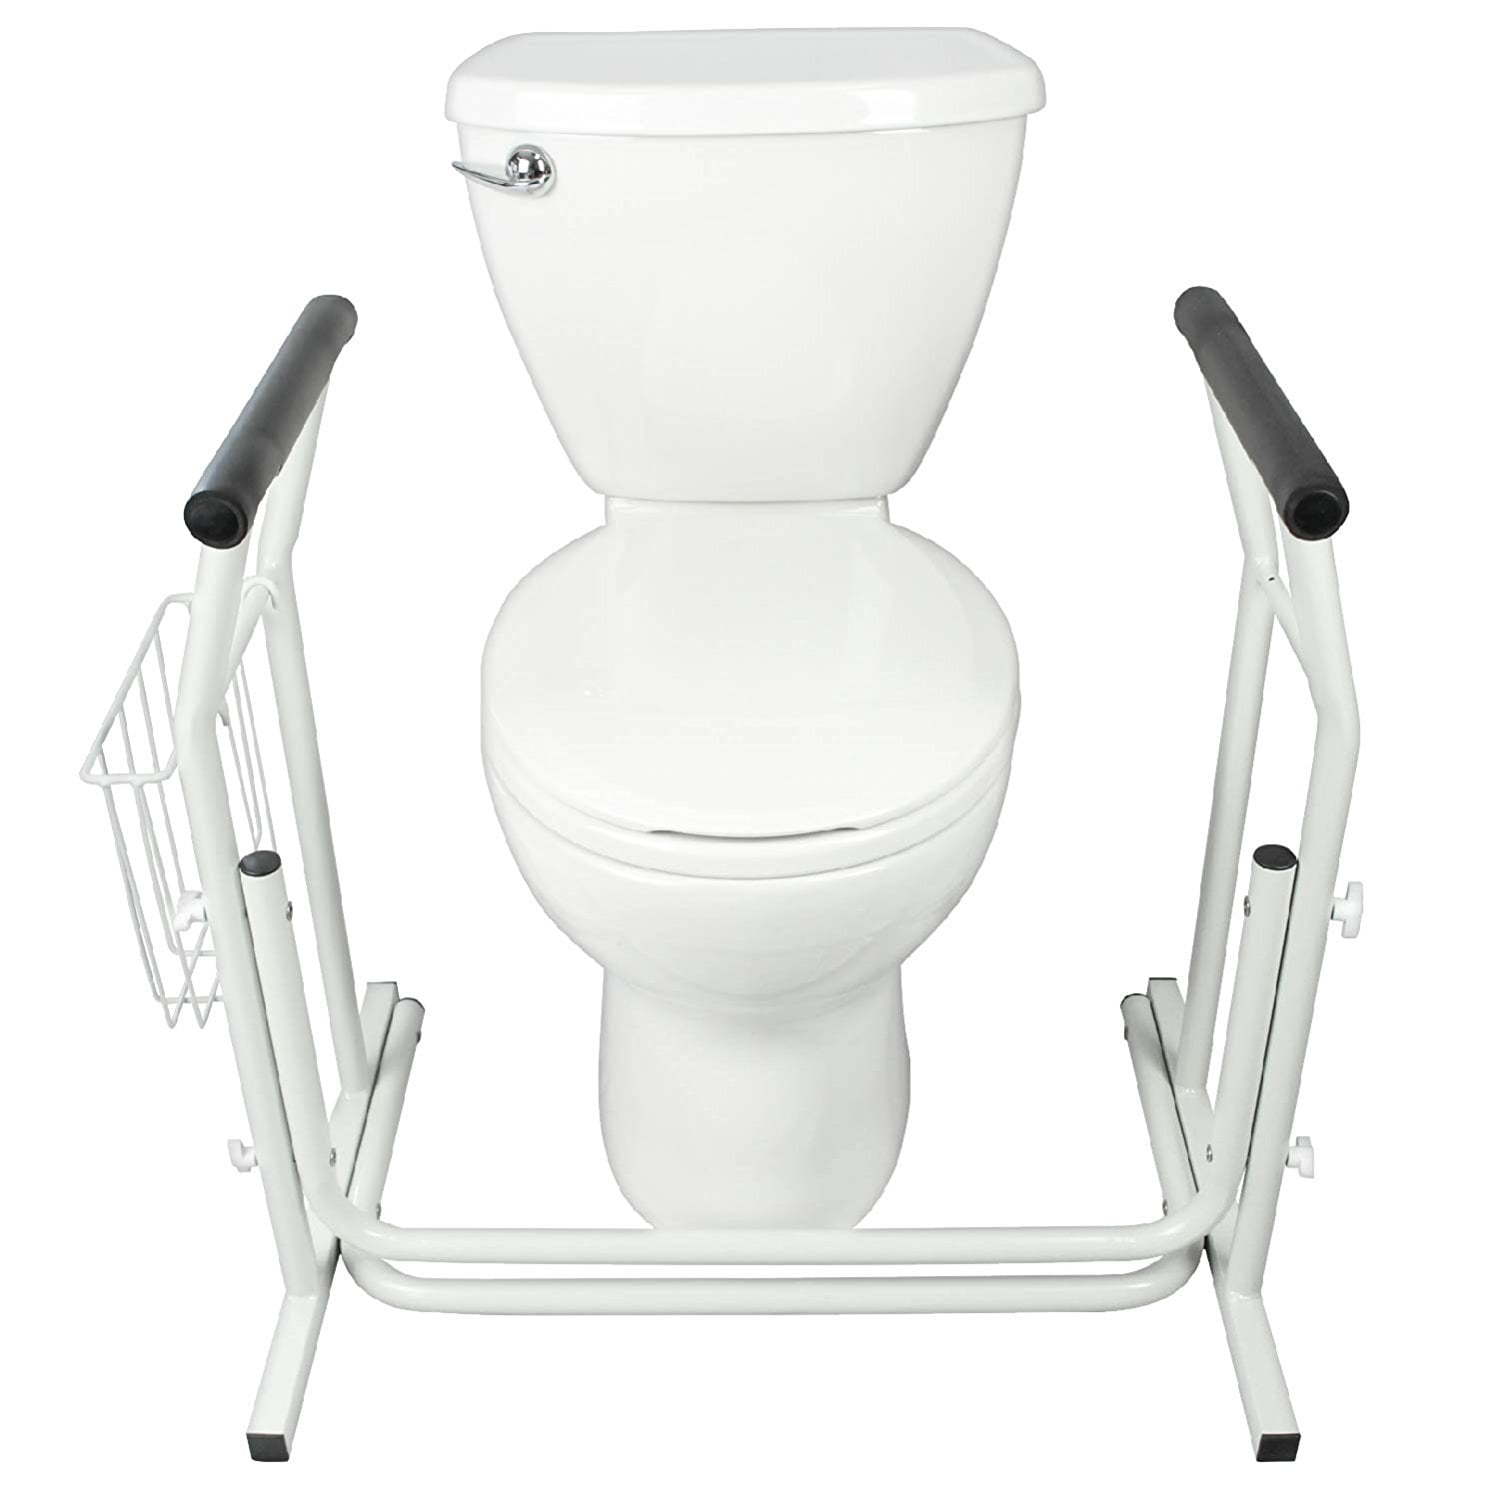 Stand Alone Toilet Rail - Bathroom Safety Frame for Elderly, Handicap